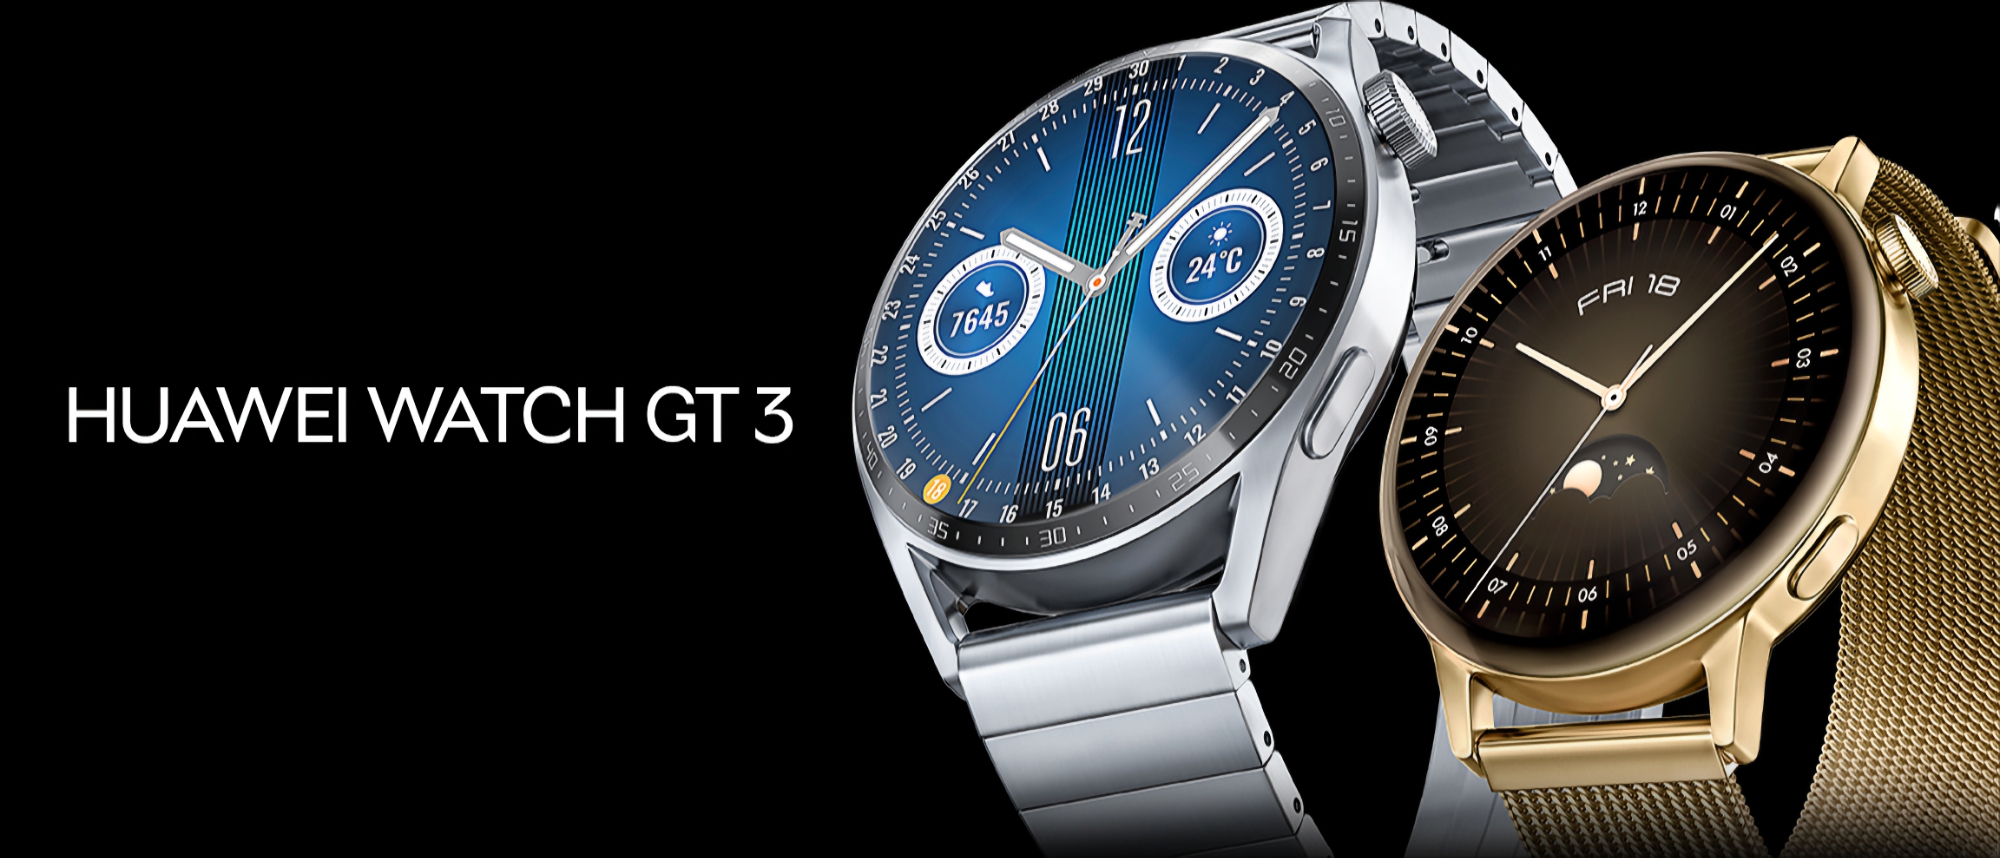 Lo smartwatch Huawei Watch GT 3 riceve un nuovo aggiornamento software